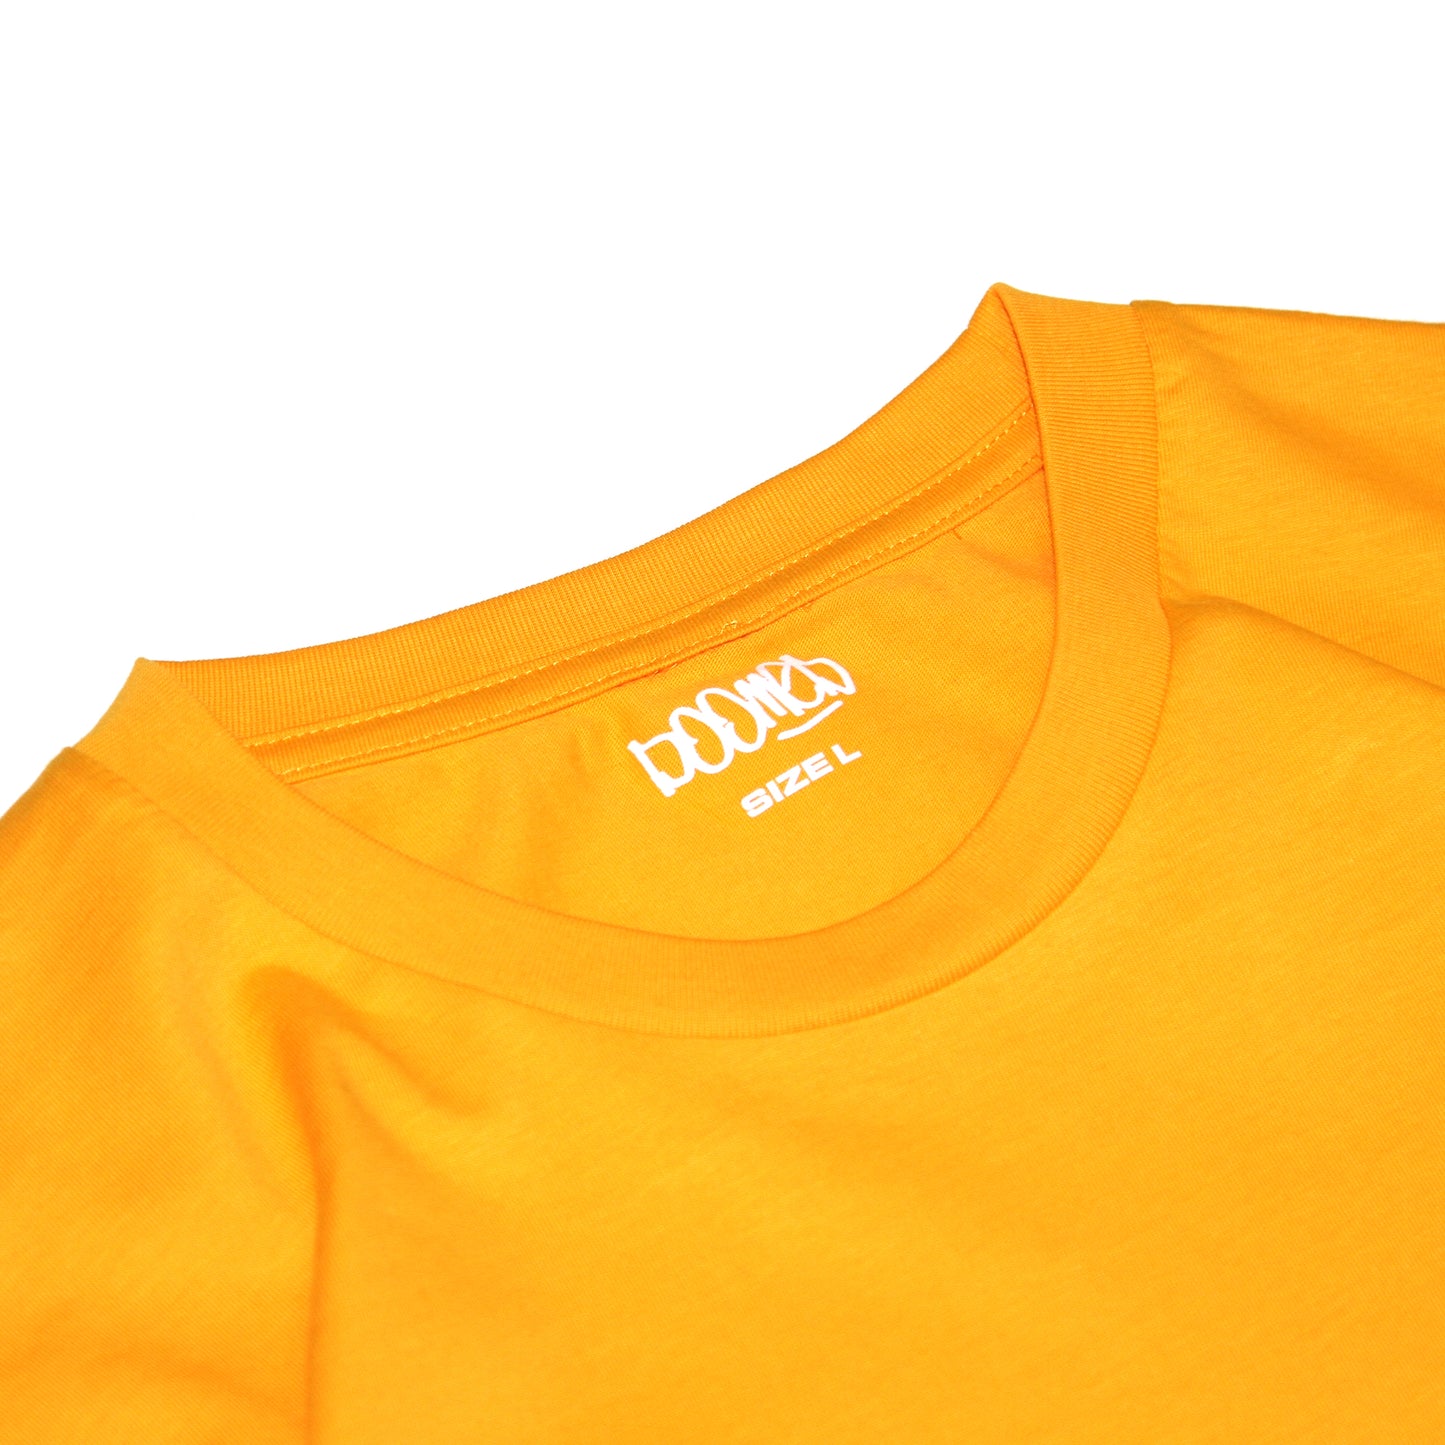 DOOMED - Bend T-Shirt/Gold